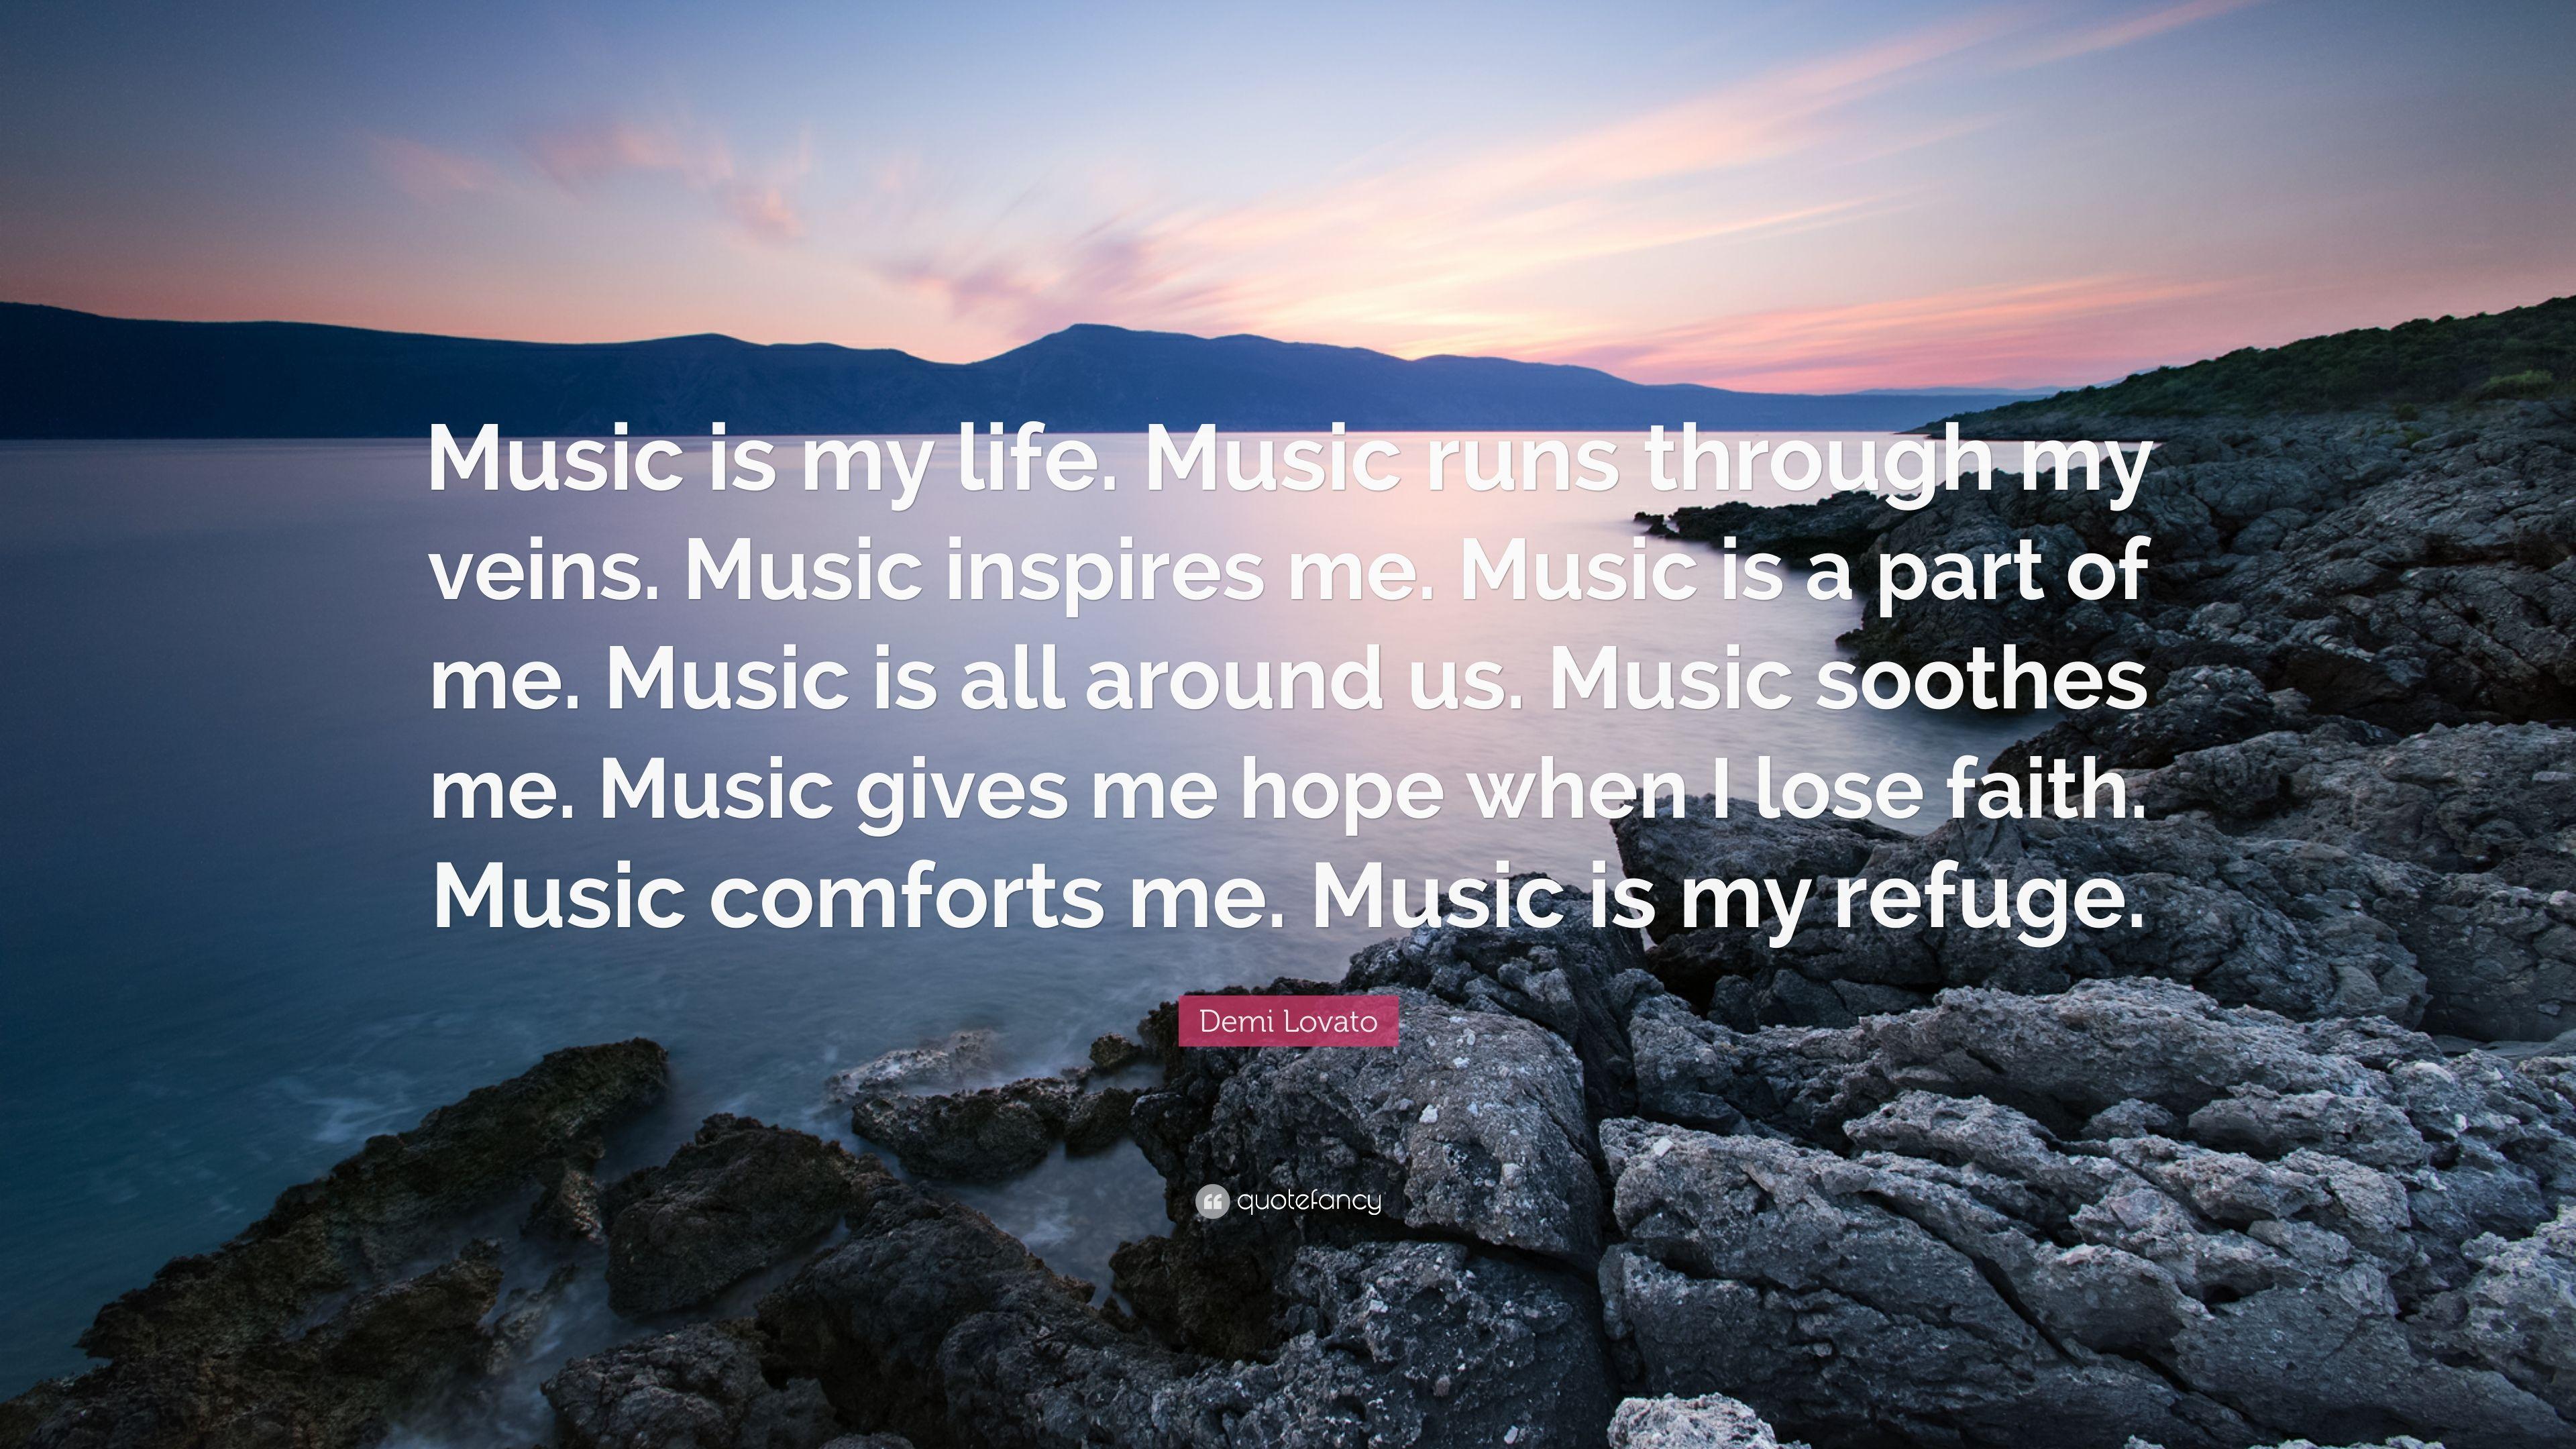 Demi Lovato Quote: “Music is my life. Music runs through my veins